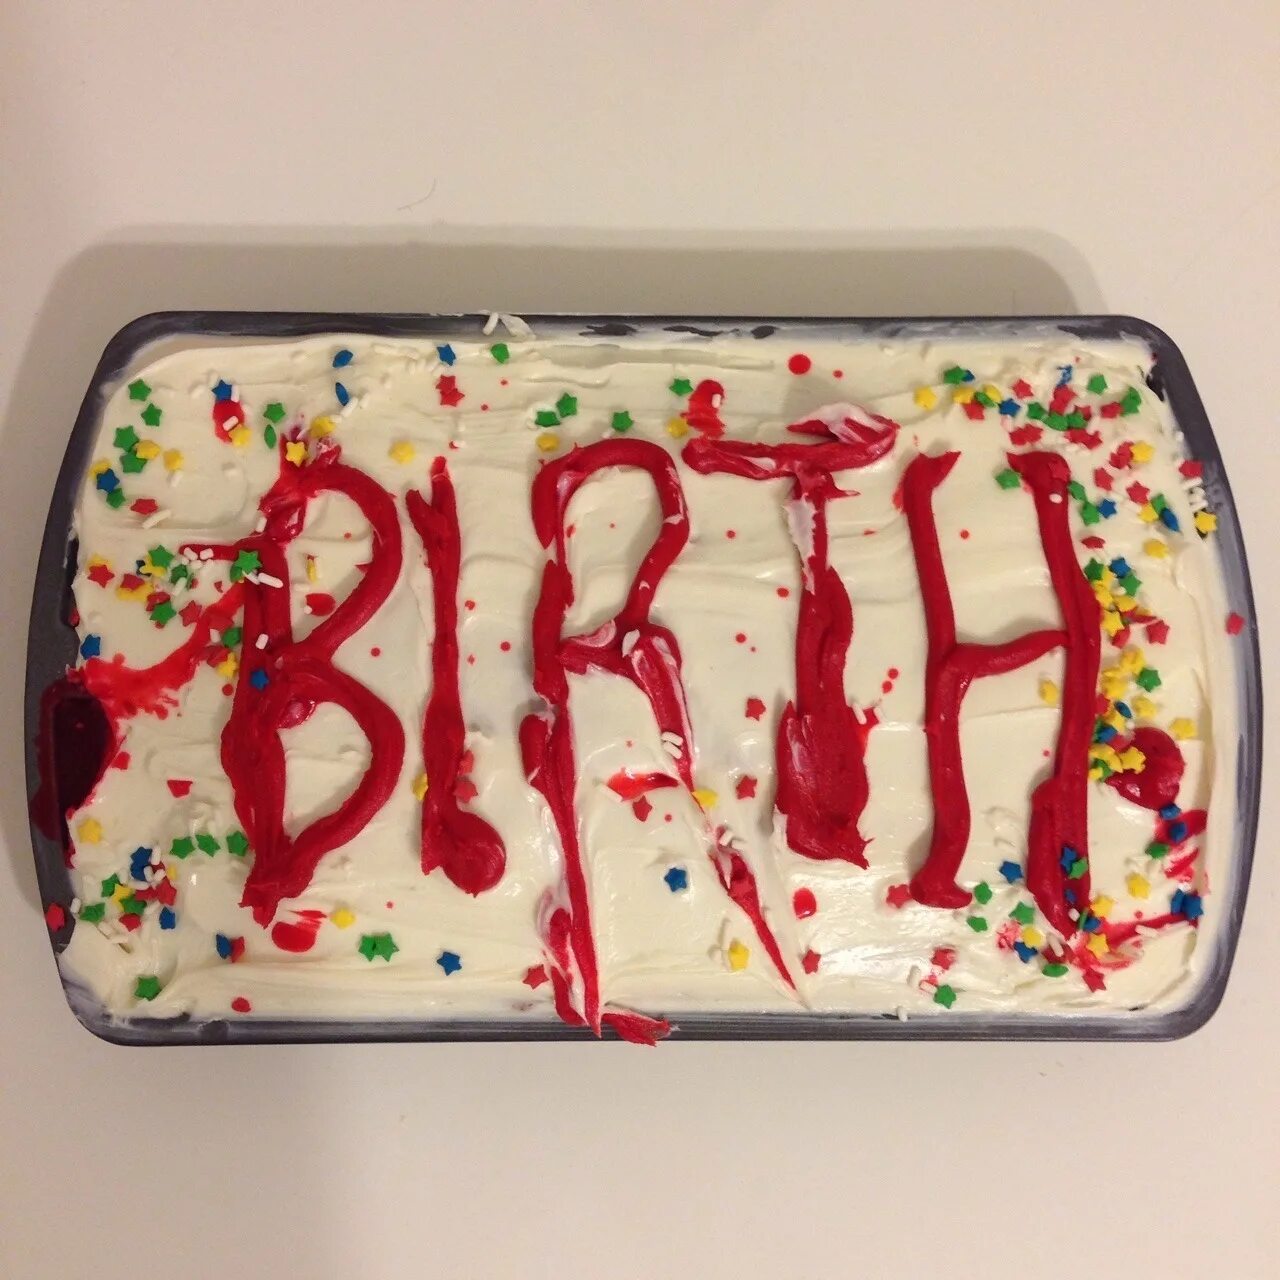 This is my cake. Birth Cake. Birthday Cake стандартный. Cake Sorter Cake. Prada Birthday Cake.